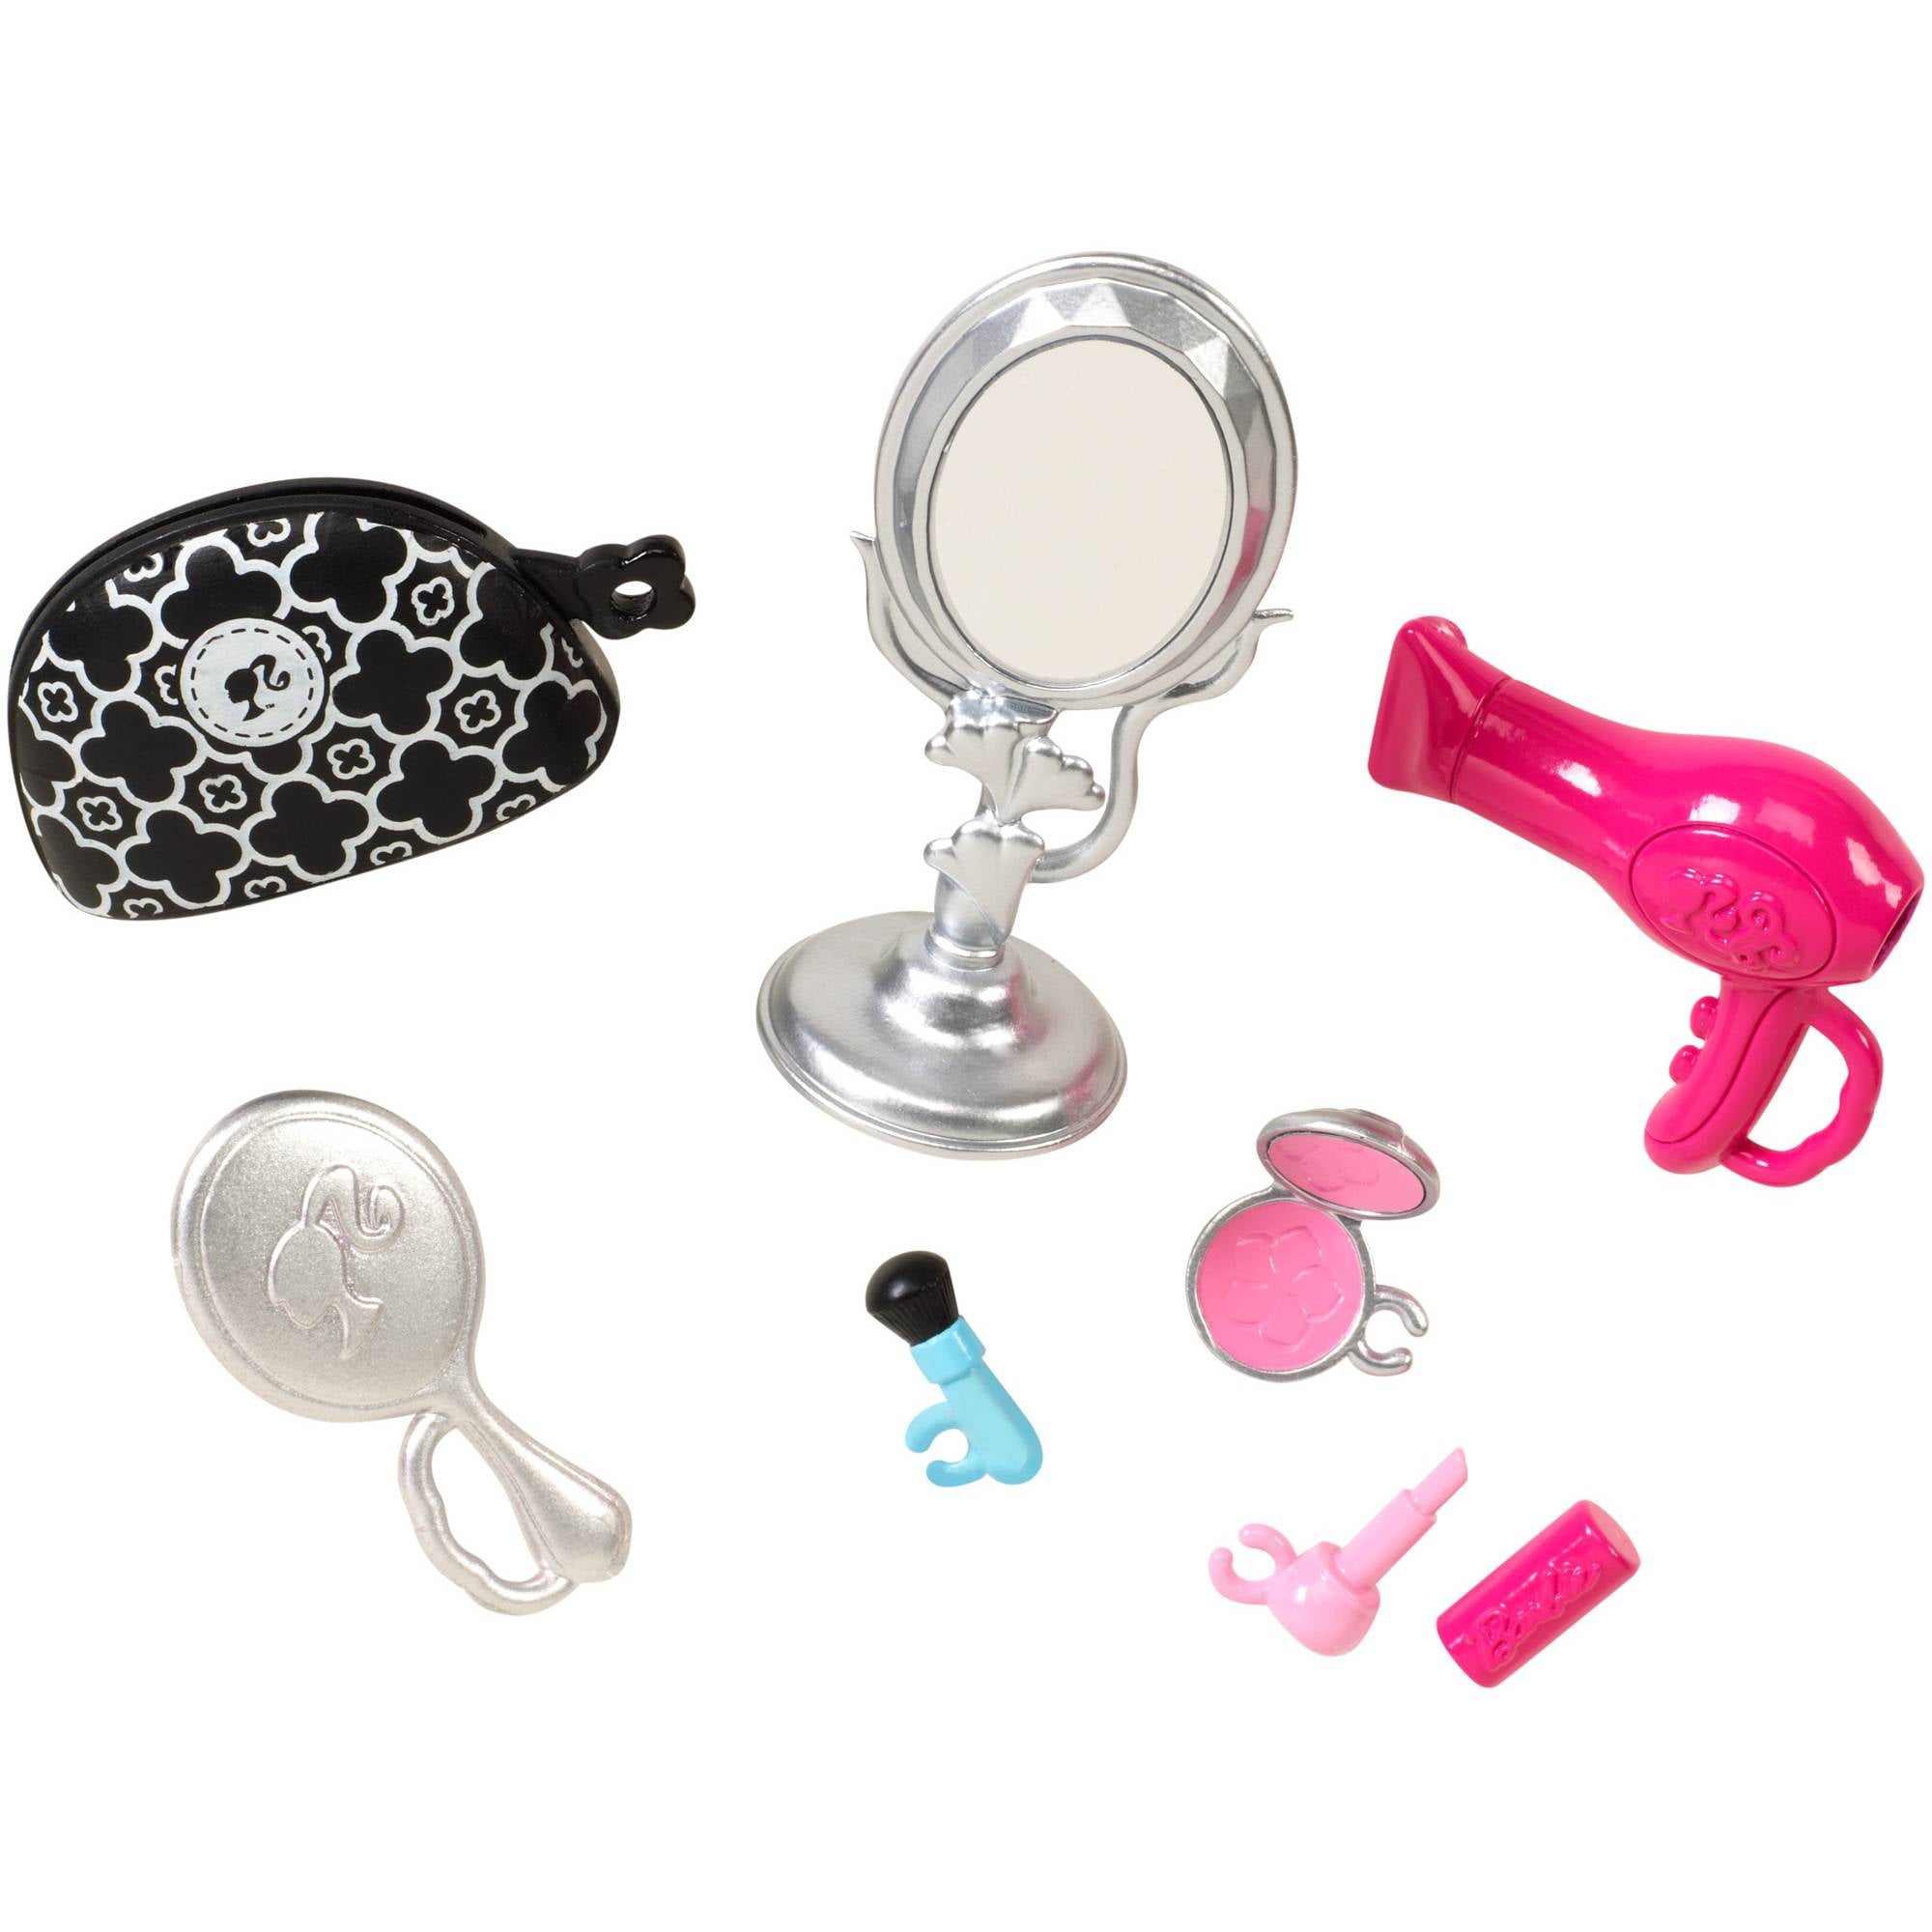  Barbie Accessories, Kids Toys, Makeup Tutorial Set, 12